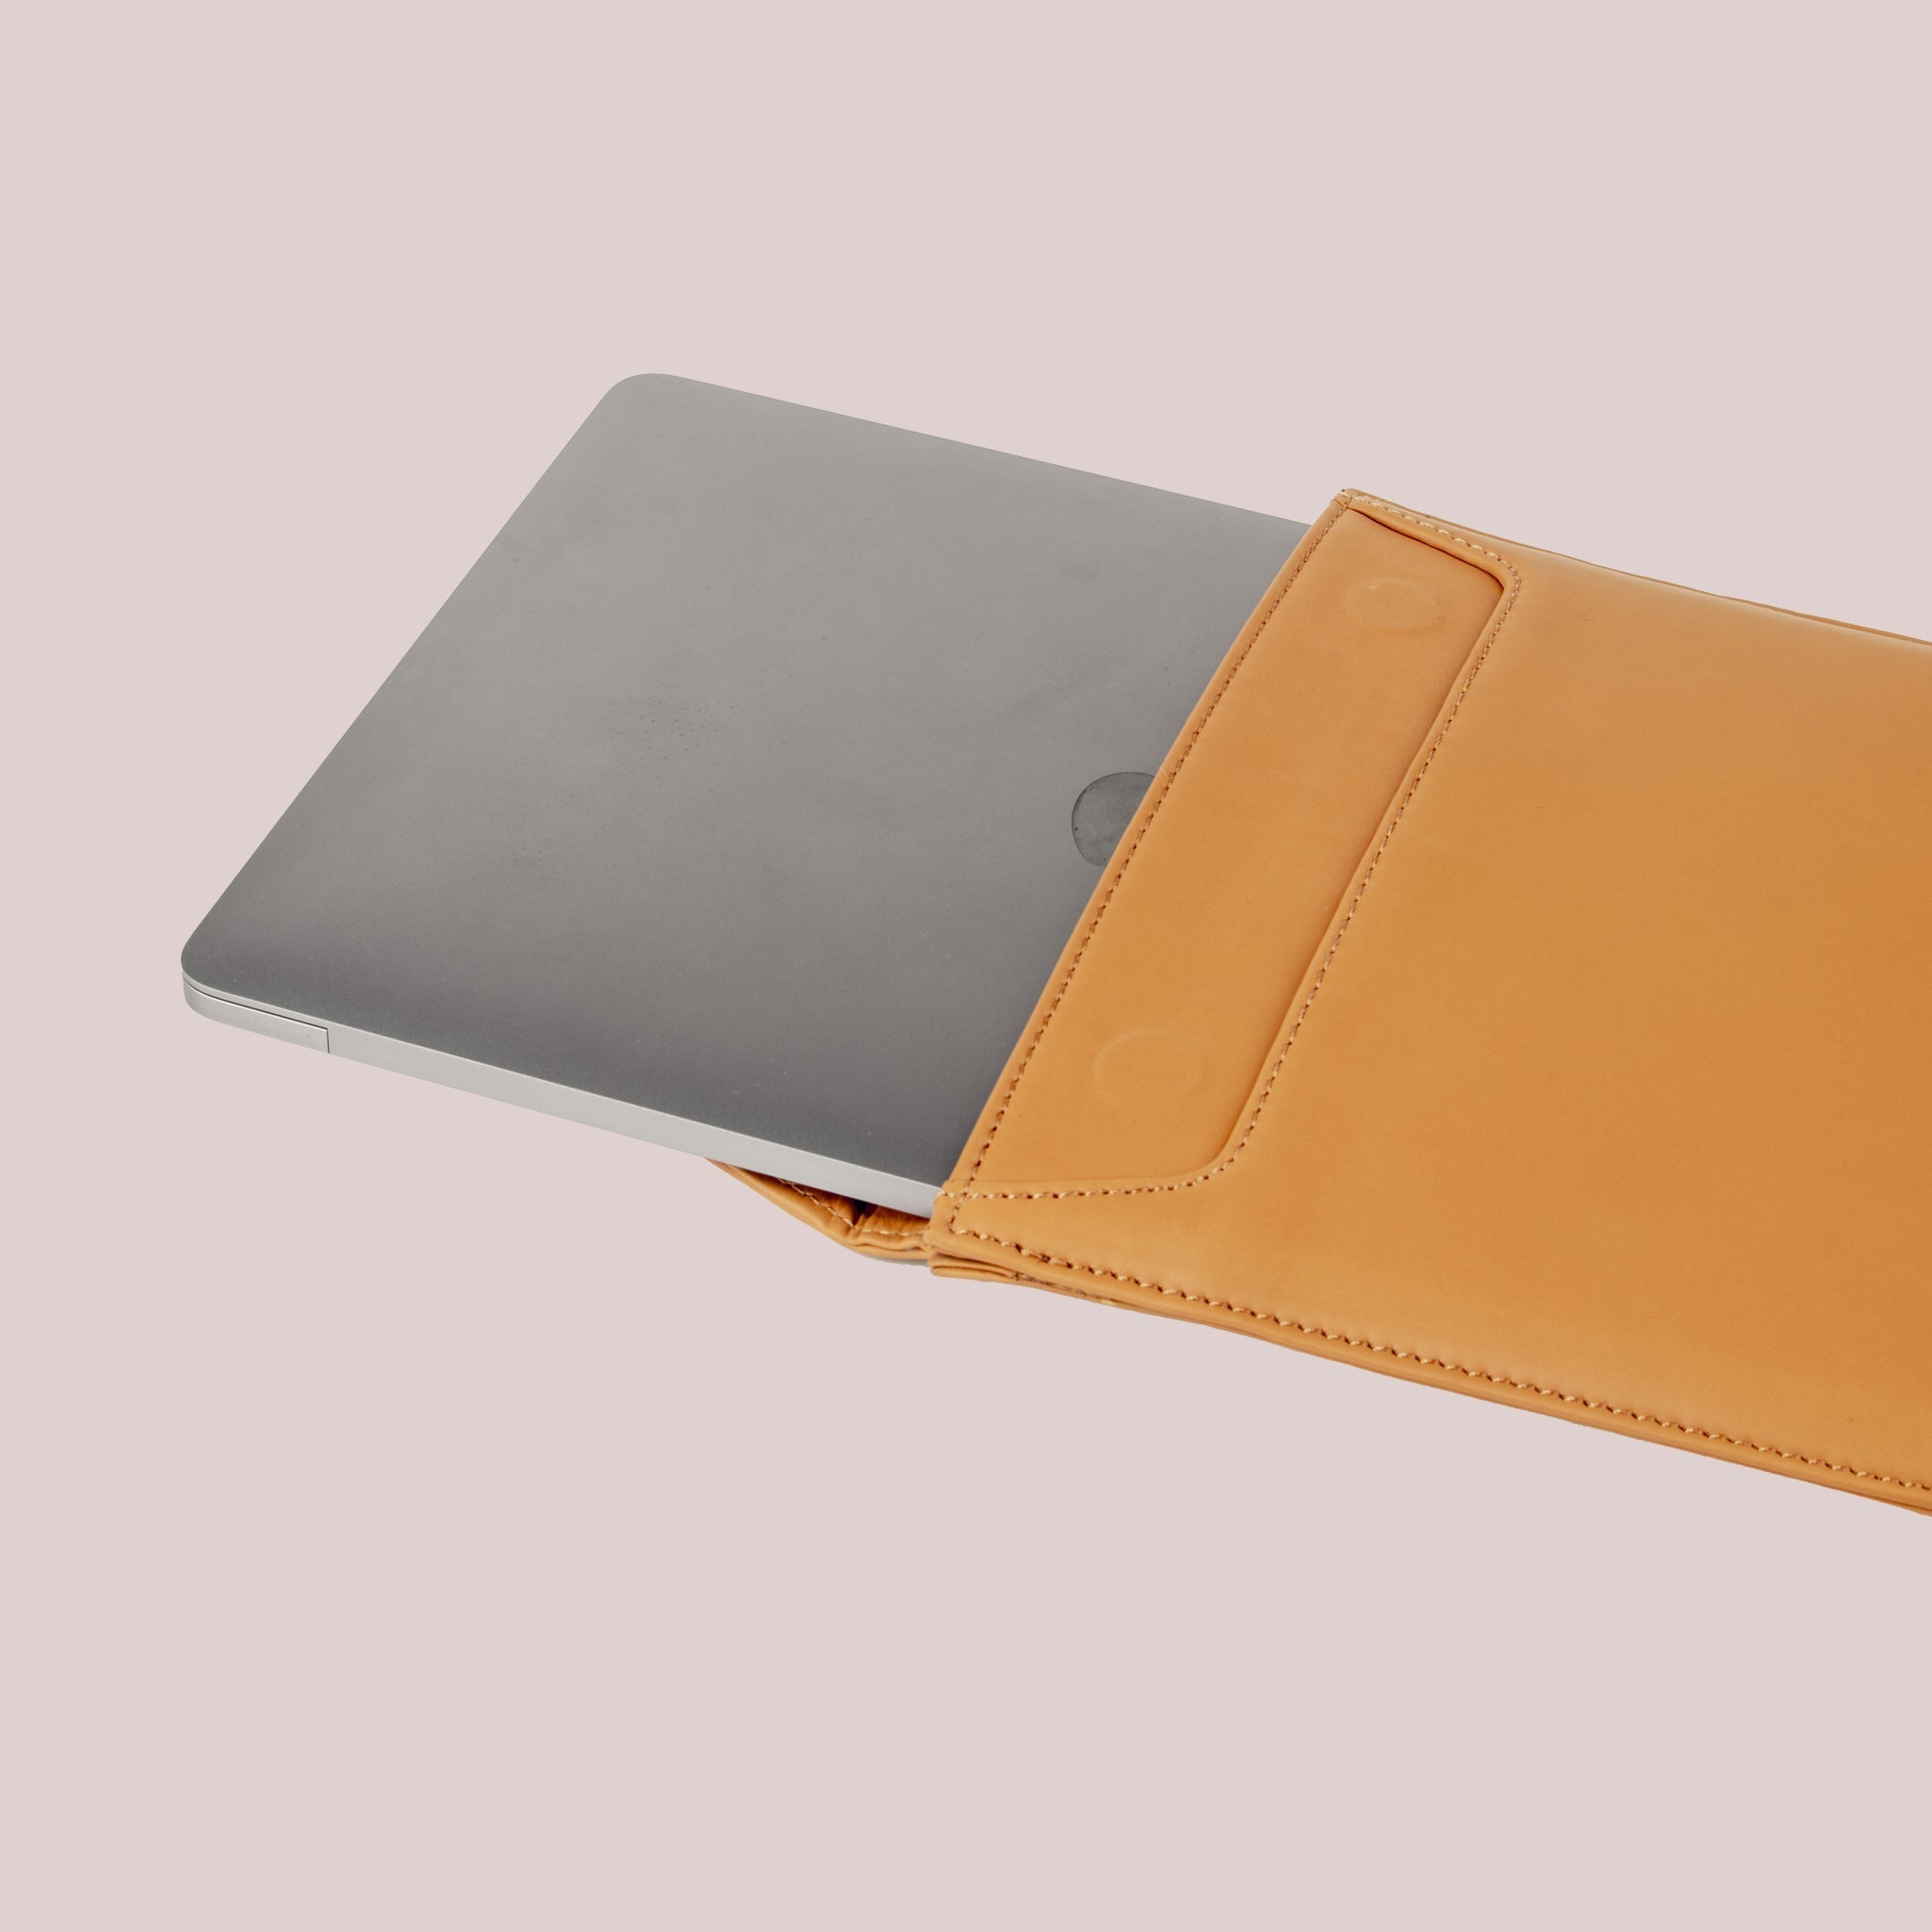 Buy Yellow leather sleeve for Macbook